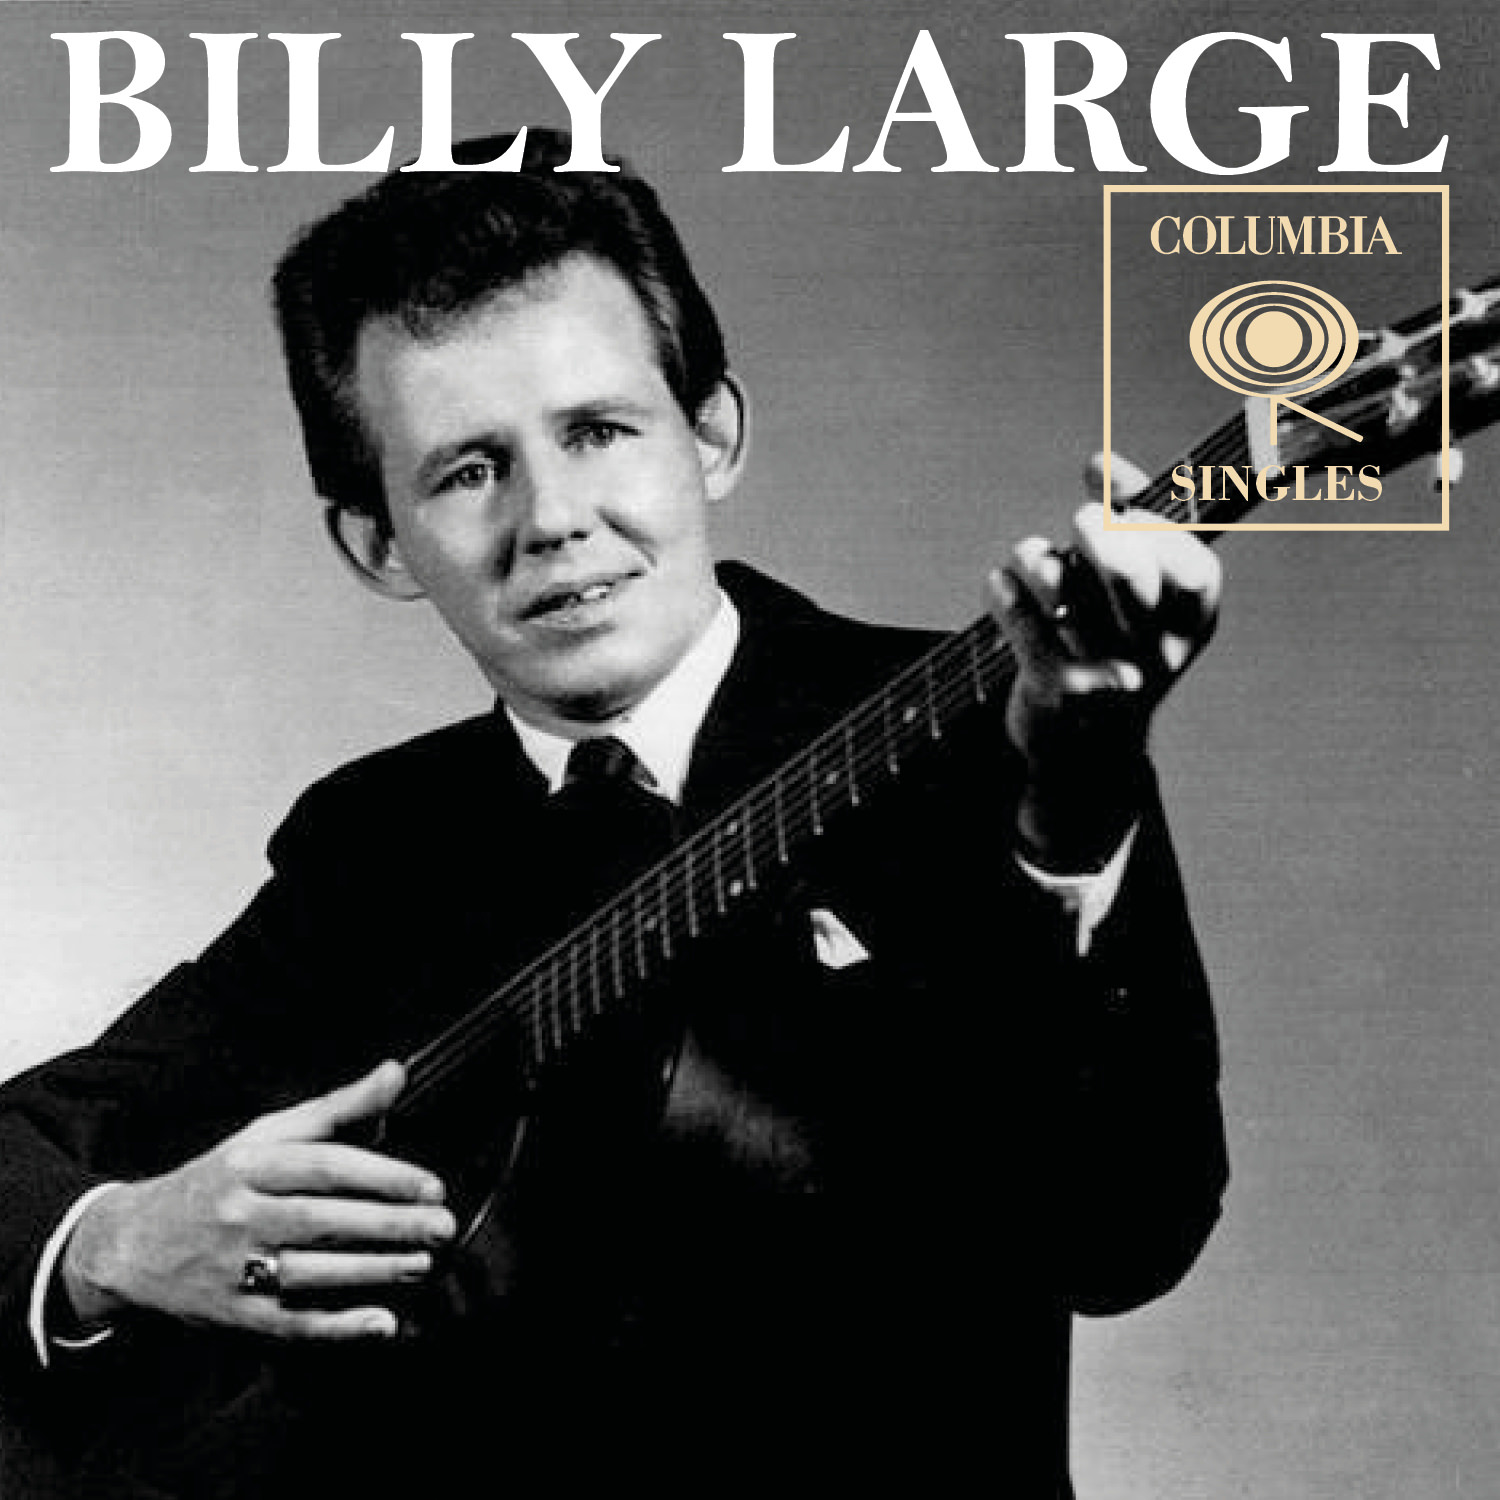 Billy Large – Columbia Singles (2017) [HDTracks FLAC 24bit/192kHz]